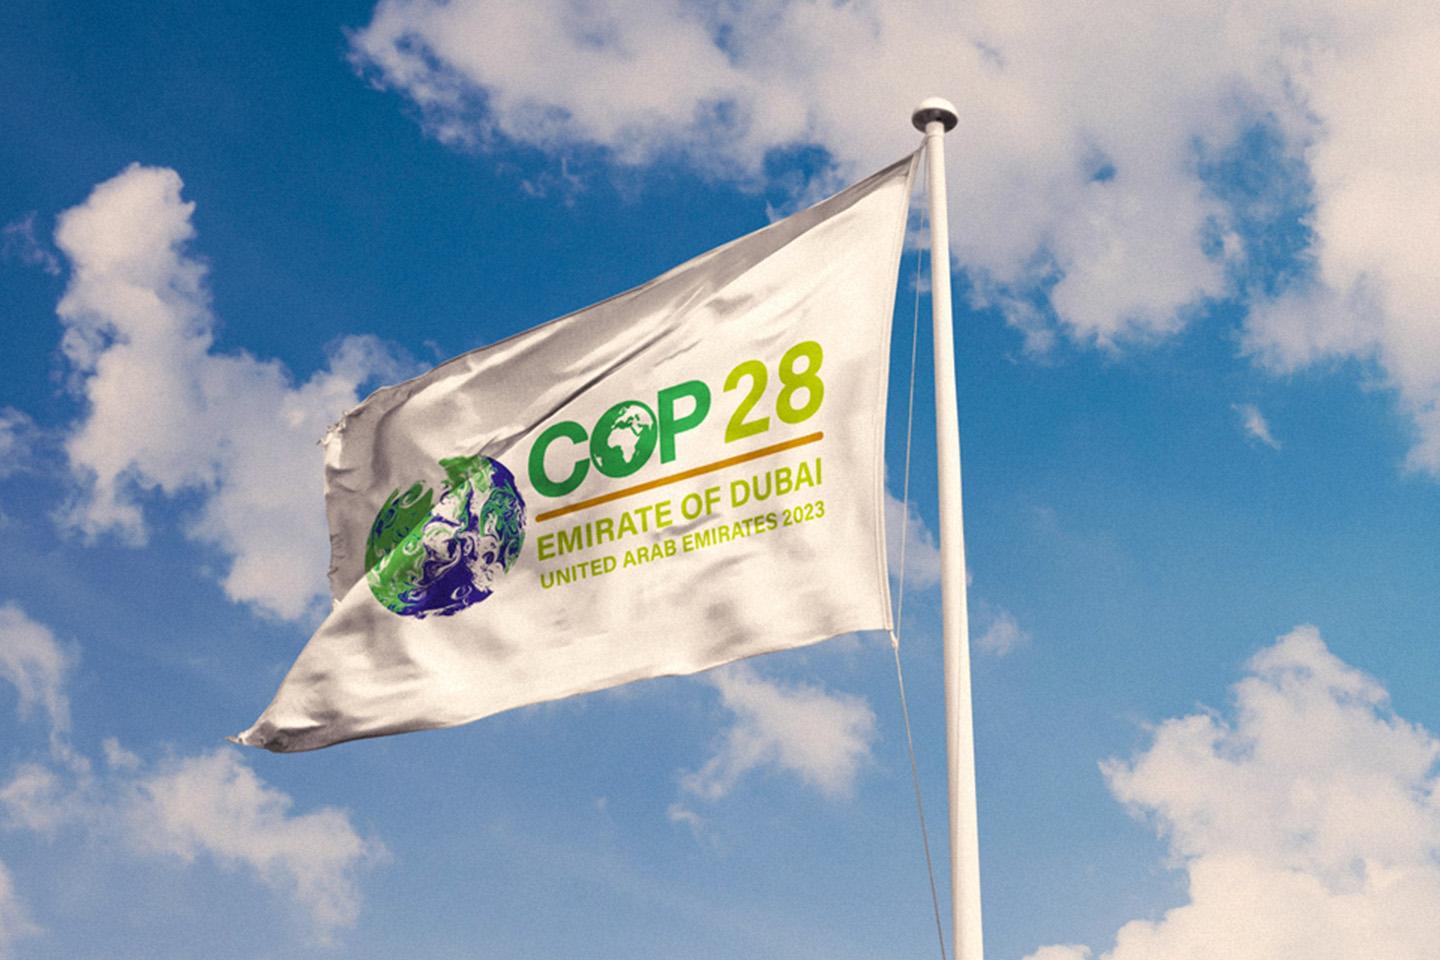 Debrief from Dubai: Takeaways from COP28 